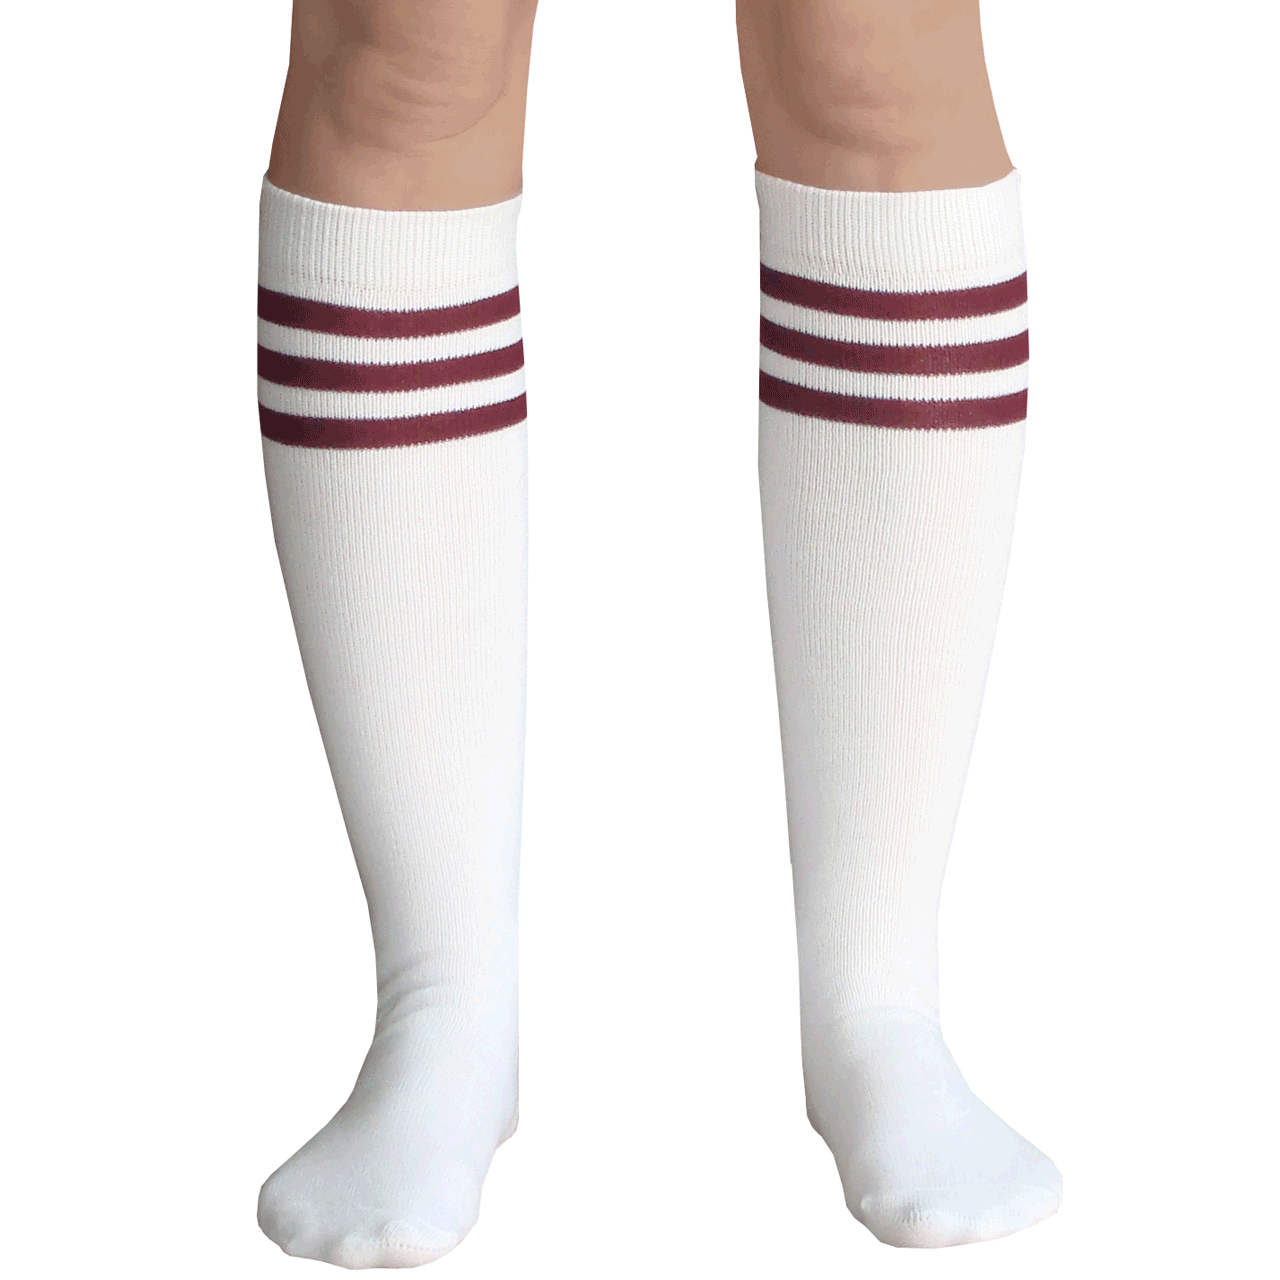 Striped Maroon Tube Socks - Made in USA